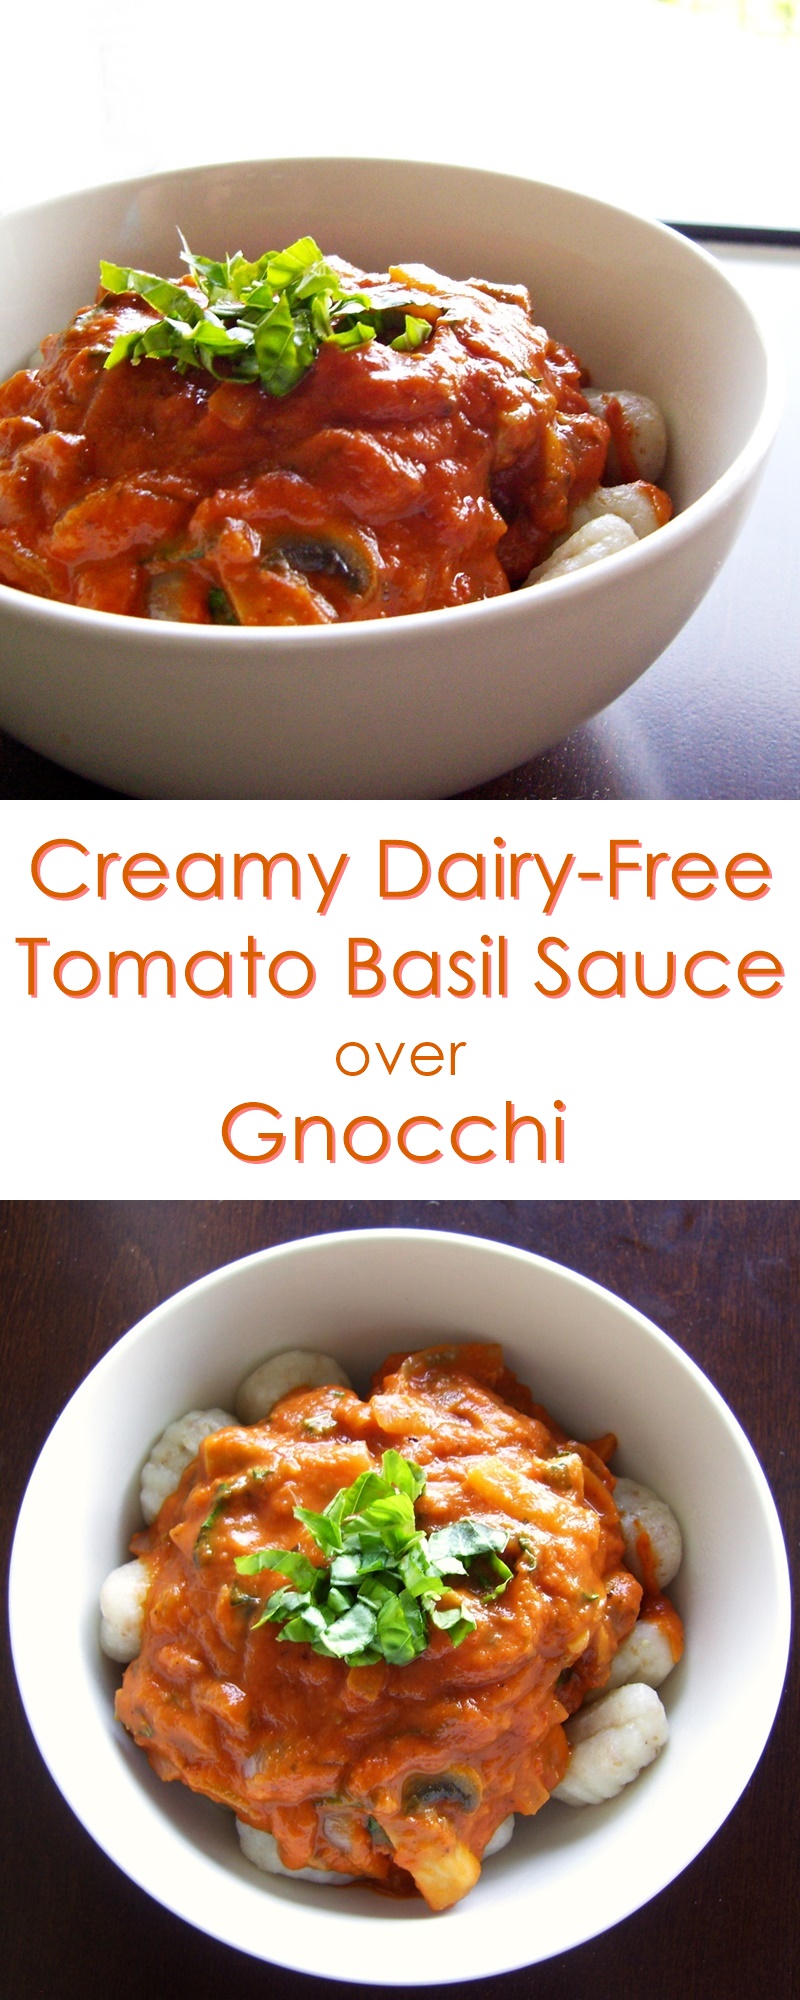 Gnocchi in a Dairy-Free Tomato Basil Cream Sauce - healthy, vegan, gluten-free optional